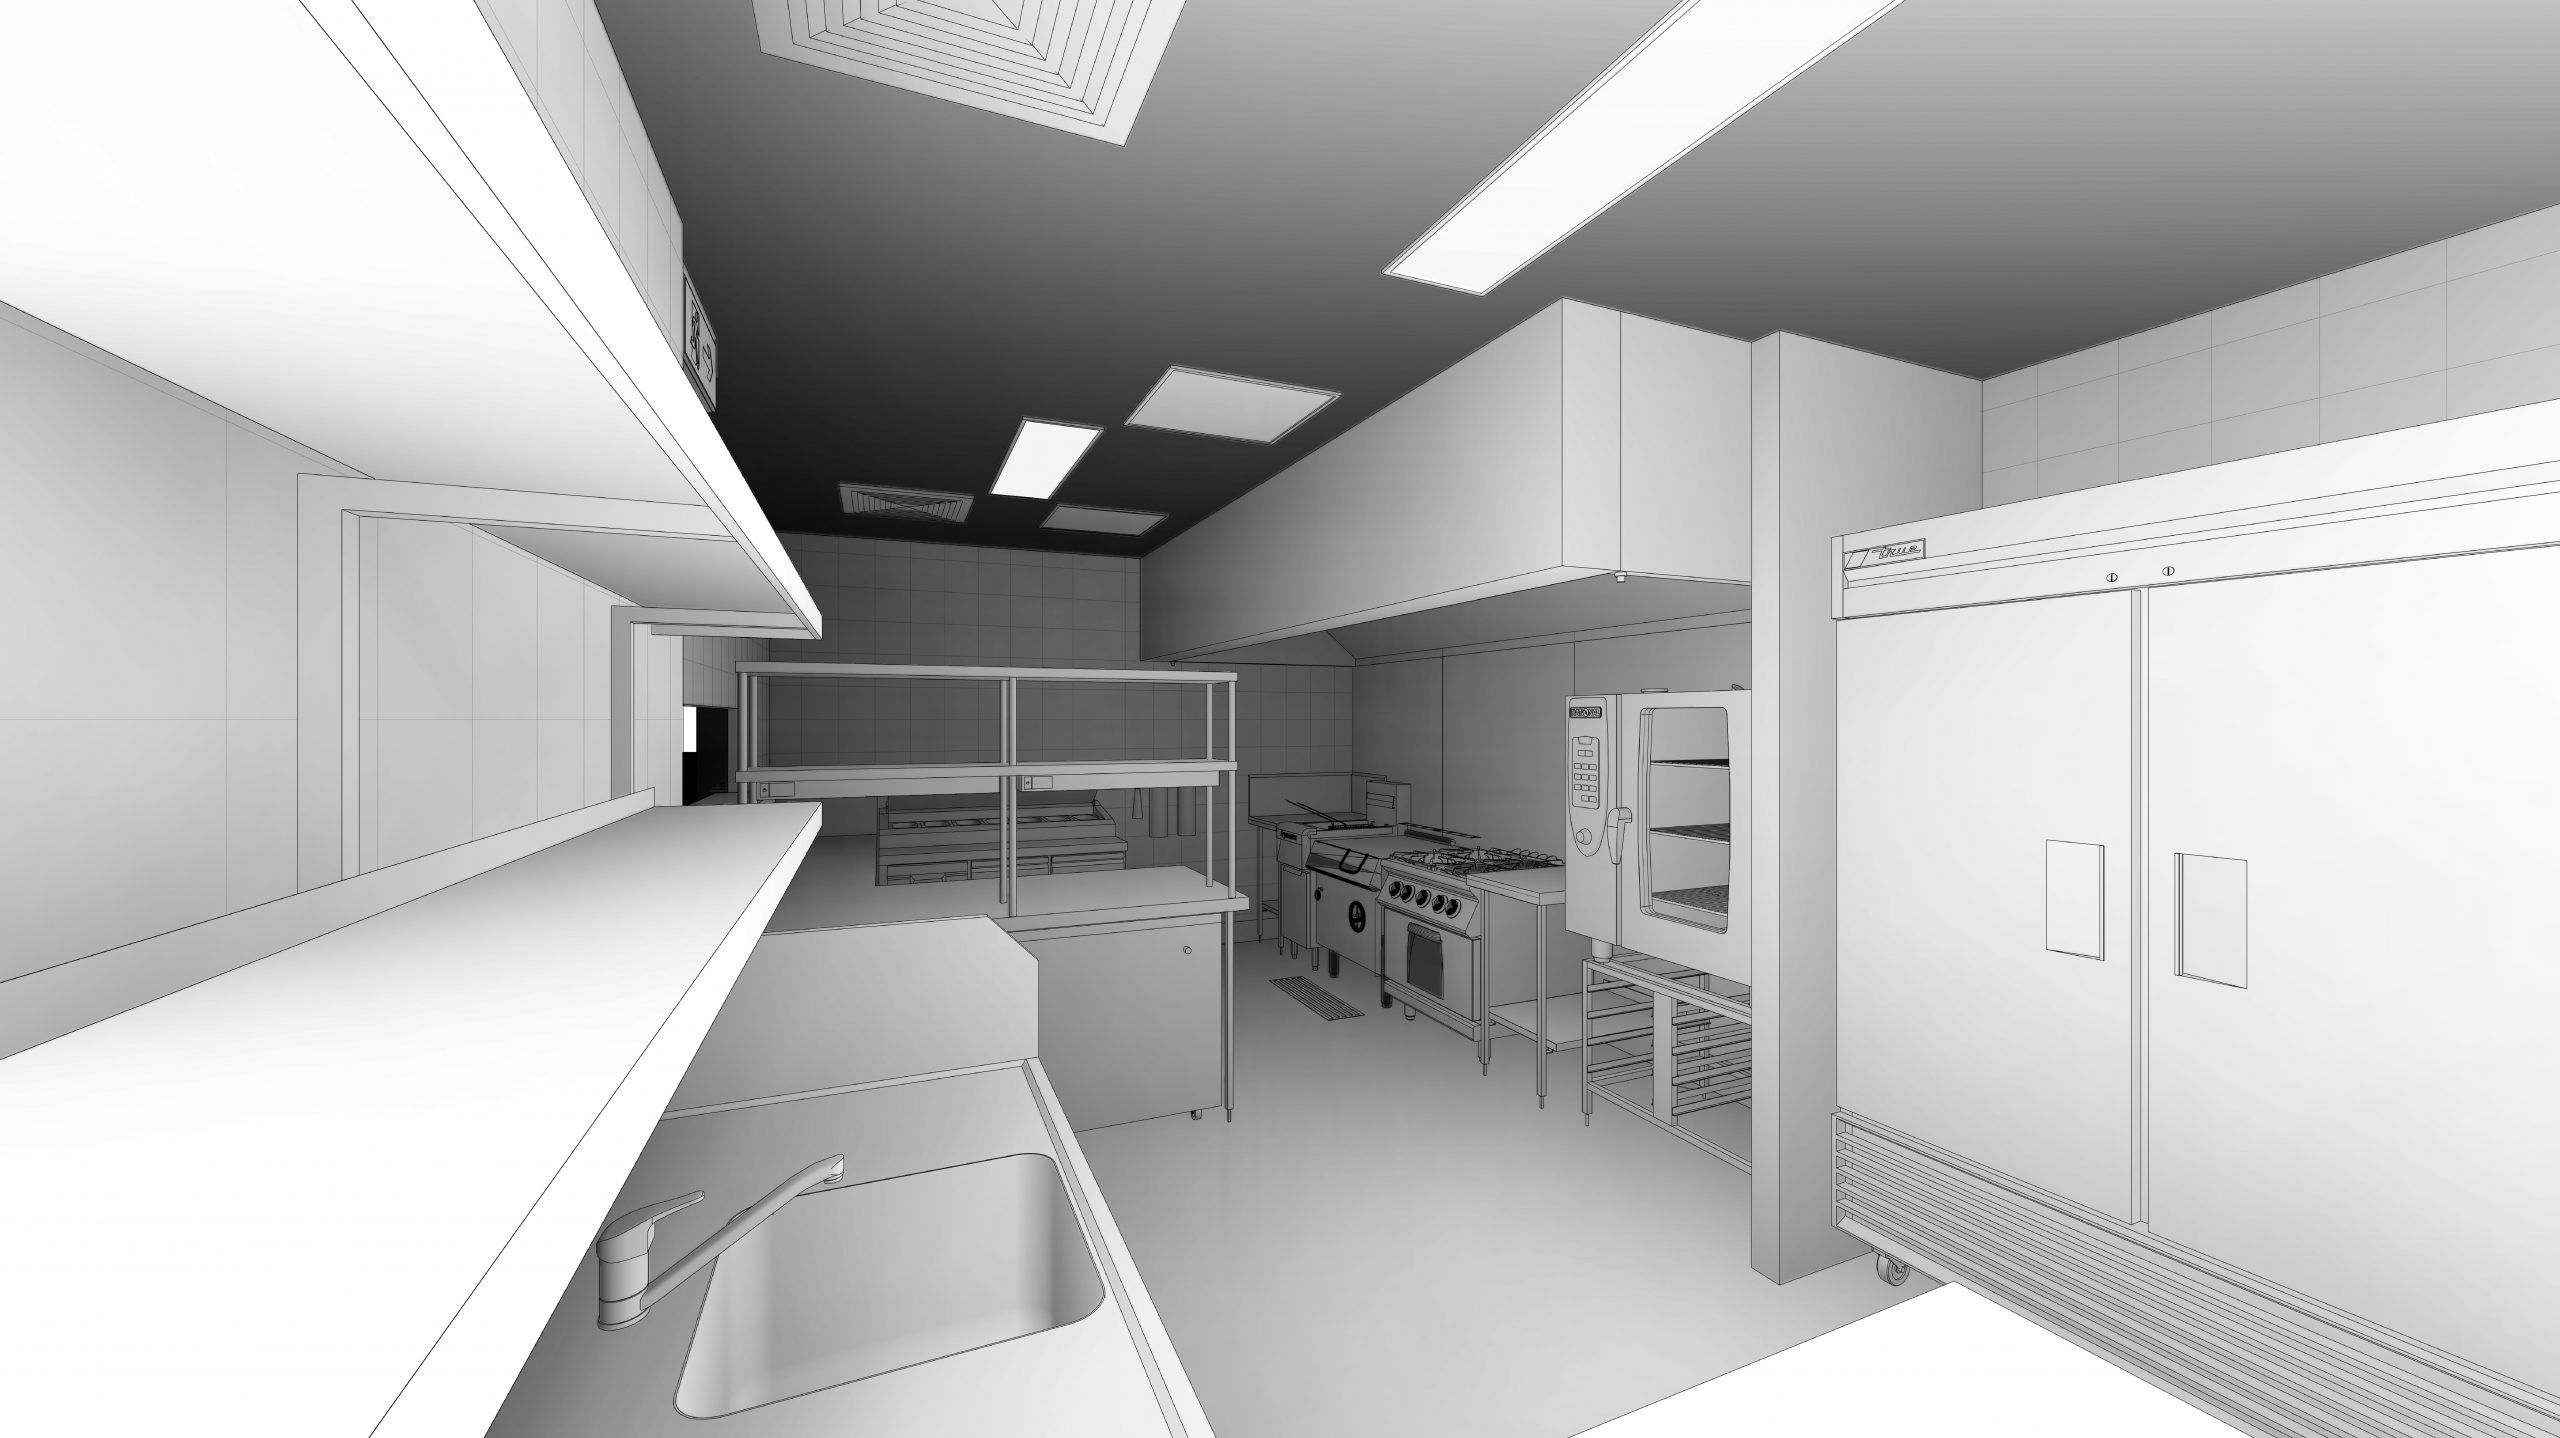 kitchen design school project